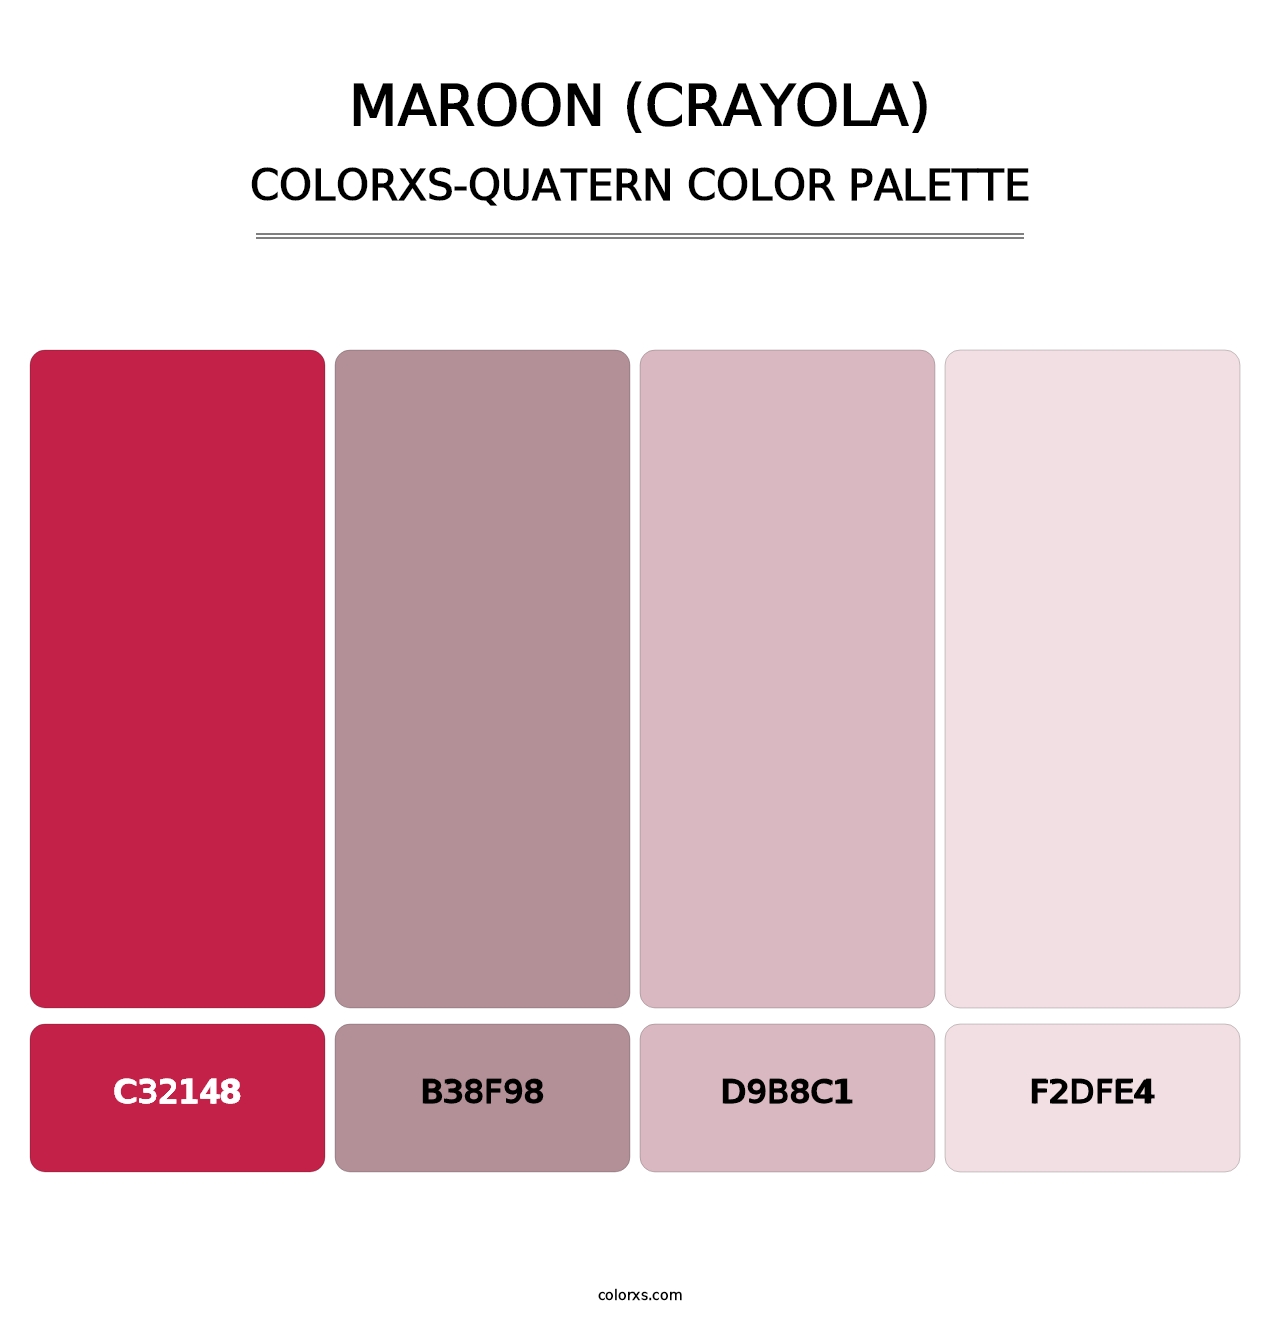 Maroon (Crayola) - Colorxs Quatern Palette